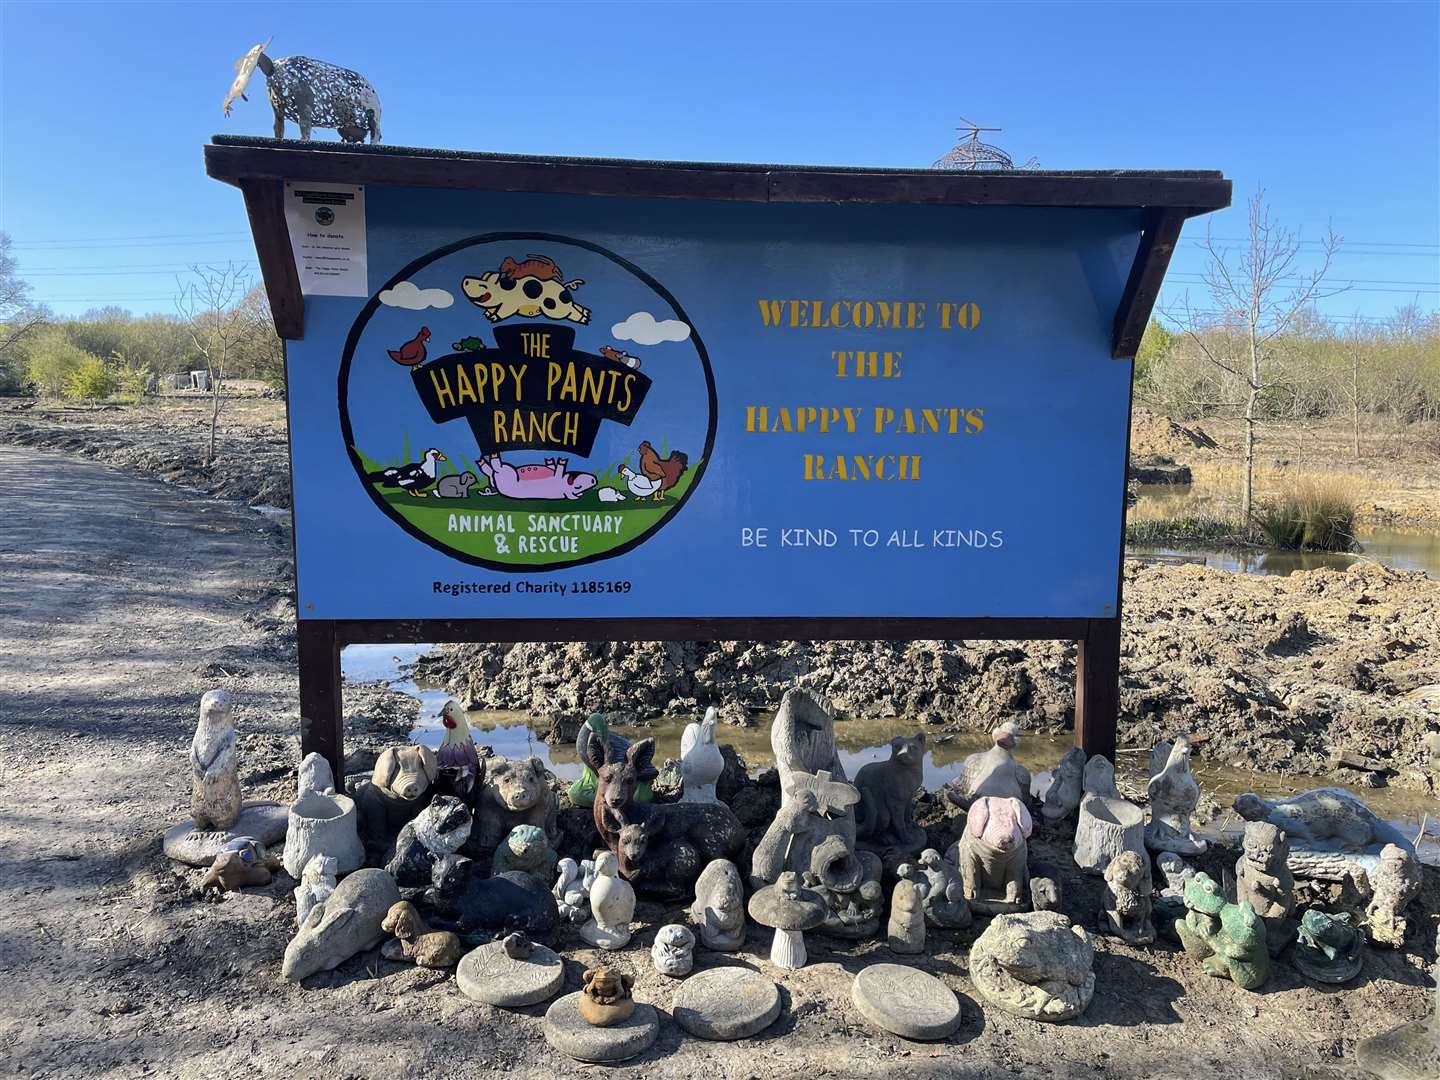 The Happy Pants Ranch animal sanctuary